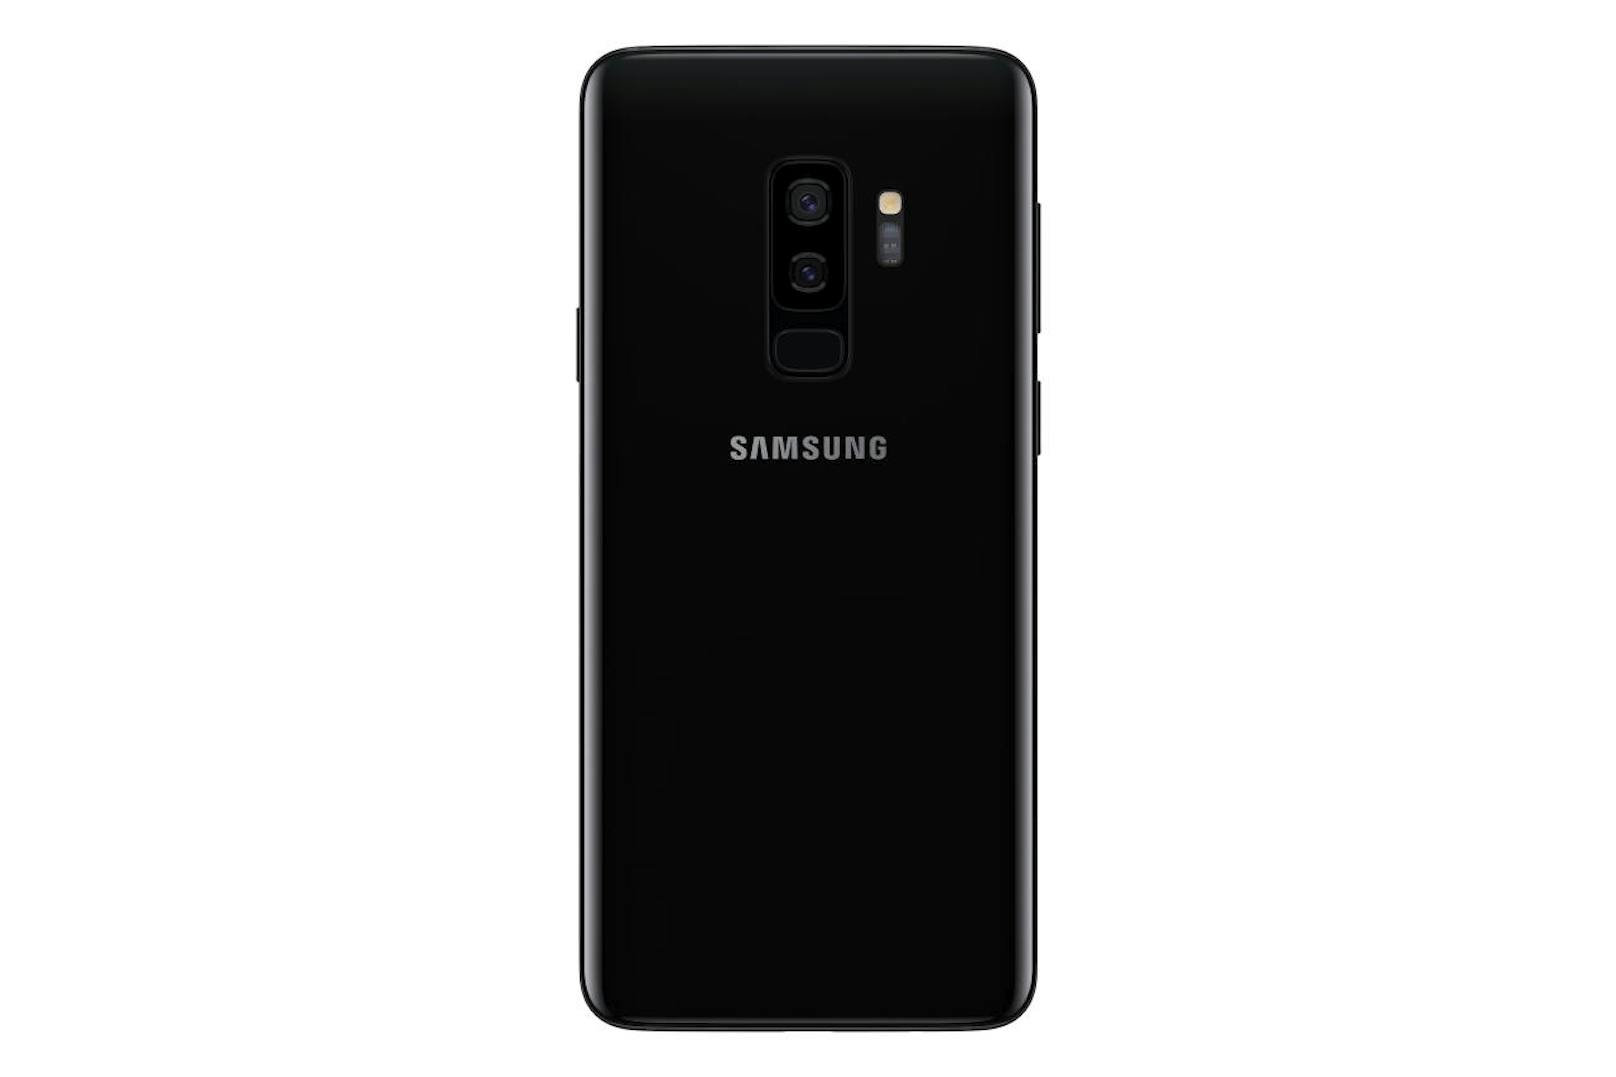 Das Samsung Galaxy S9+ mit Dual-Kamera